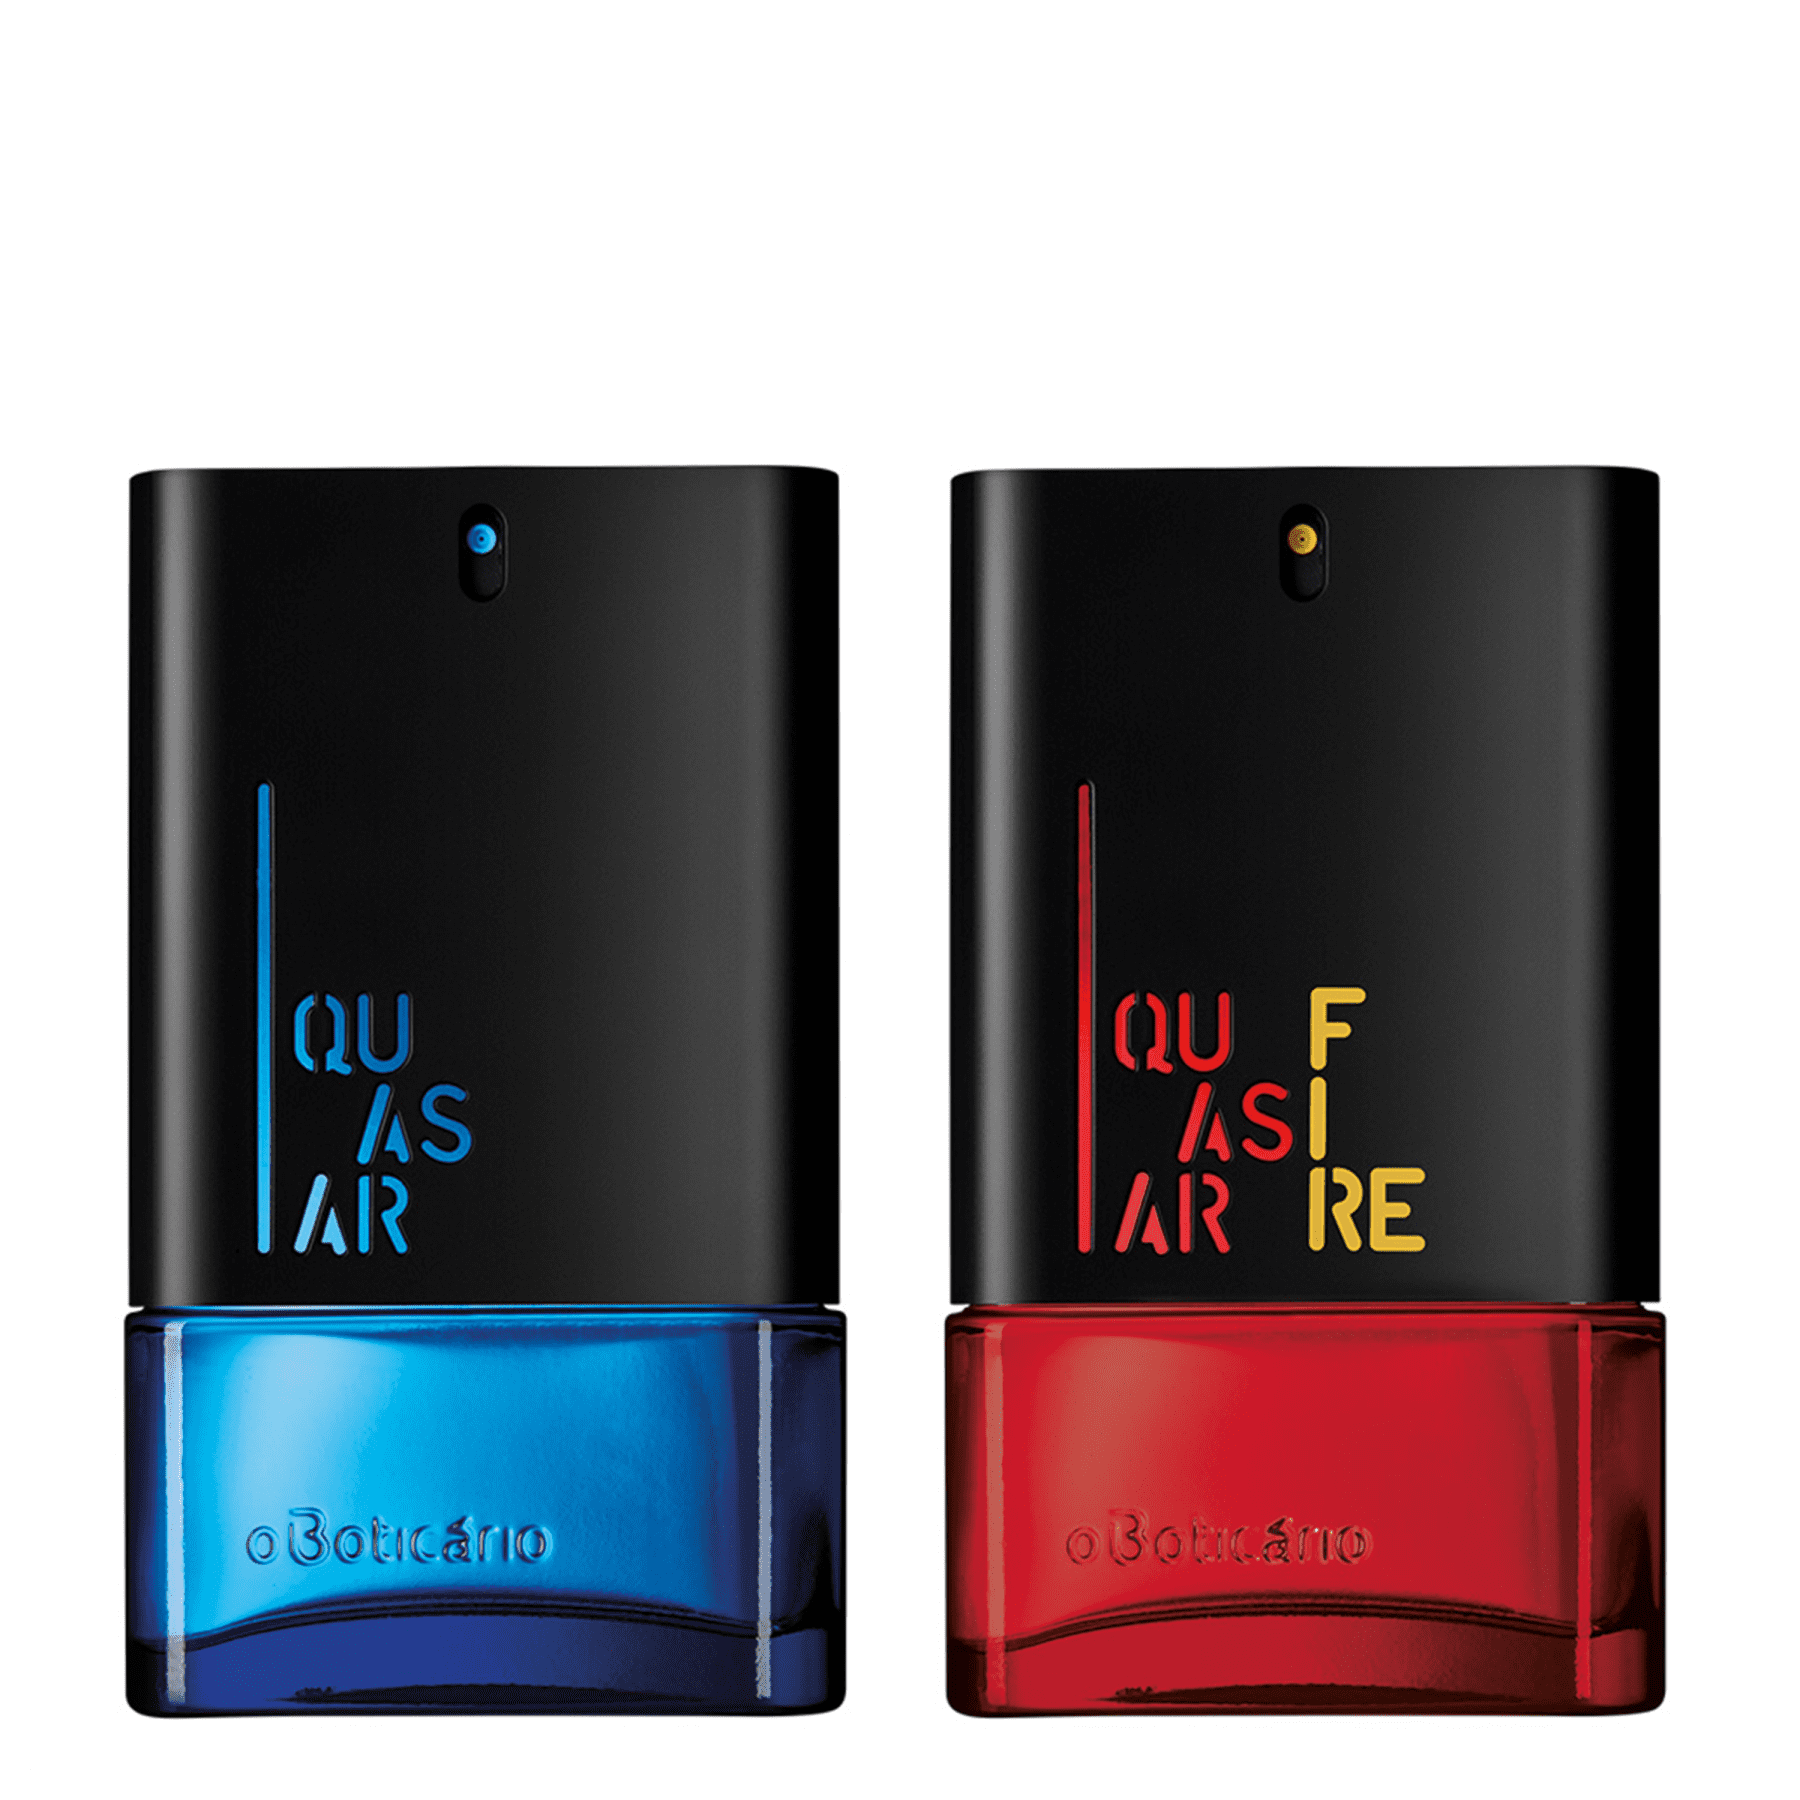 Kit Perfumery Quasar: Quasar Deodorant Cologne 100ml + Quasar Fire Deodorante Cologne 100ml